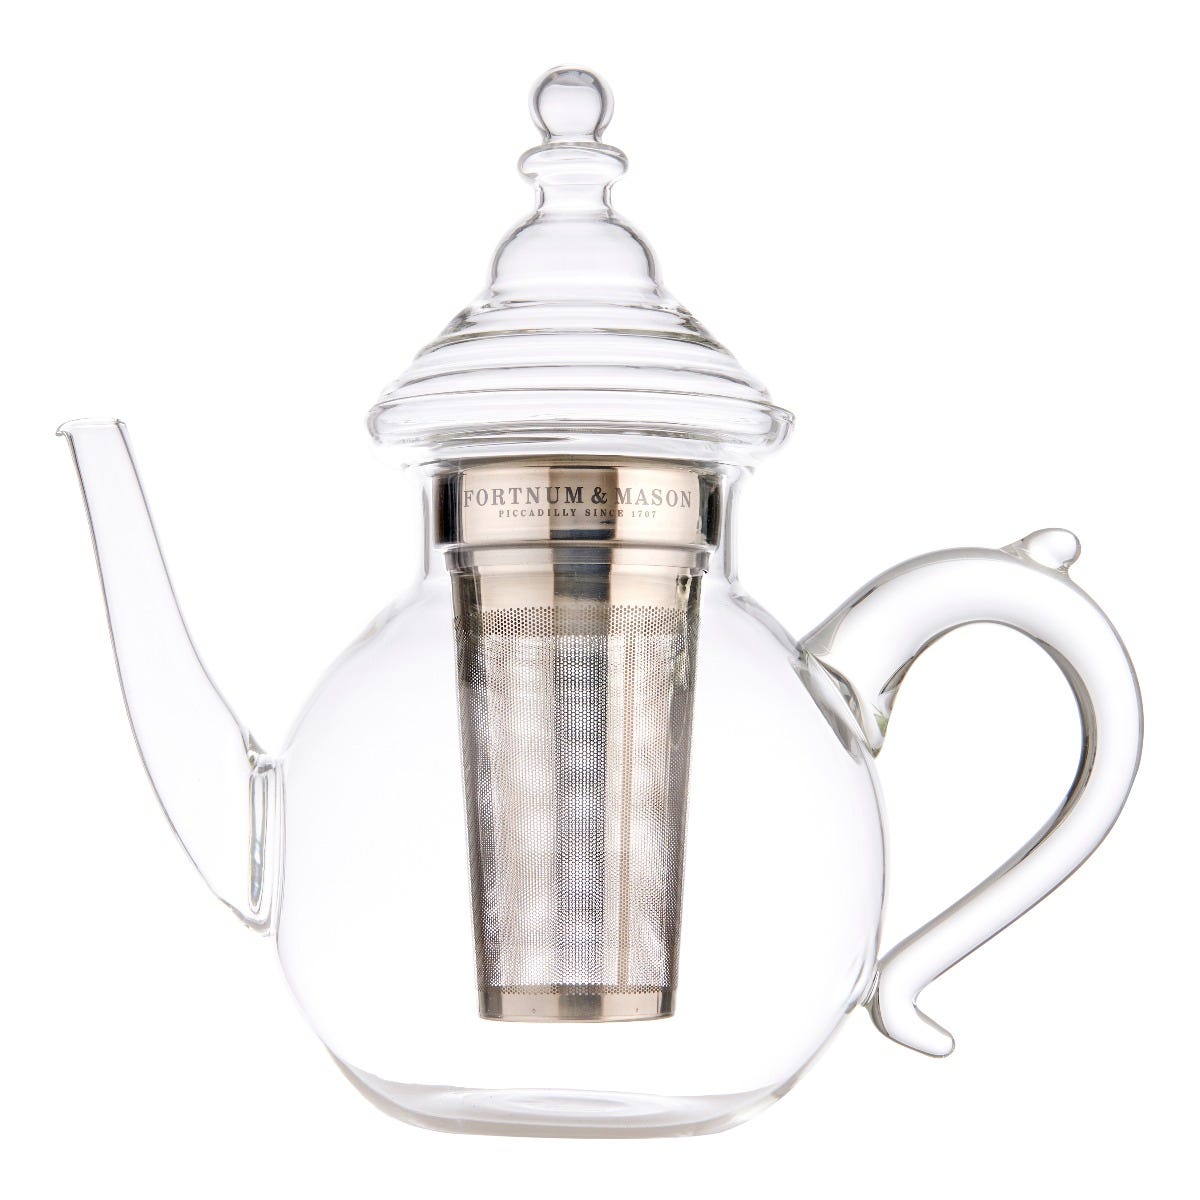 Oriental Glass Teapot (6 Cup), Fortnum & Mason